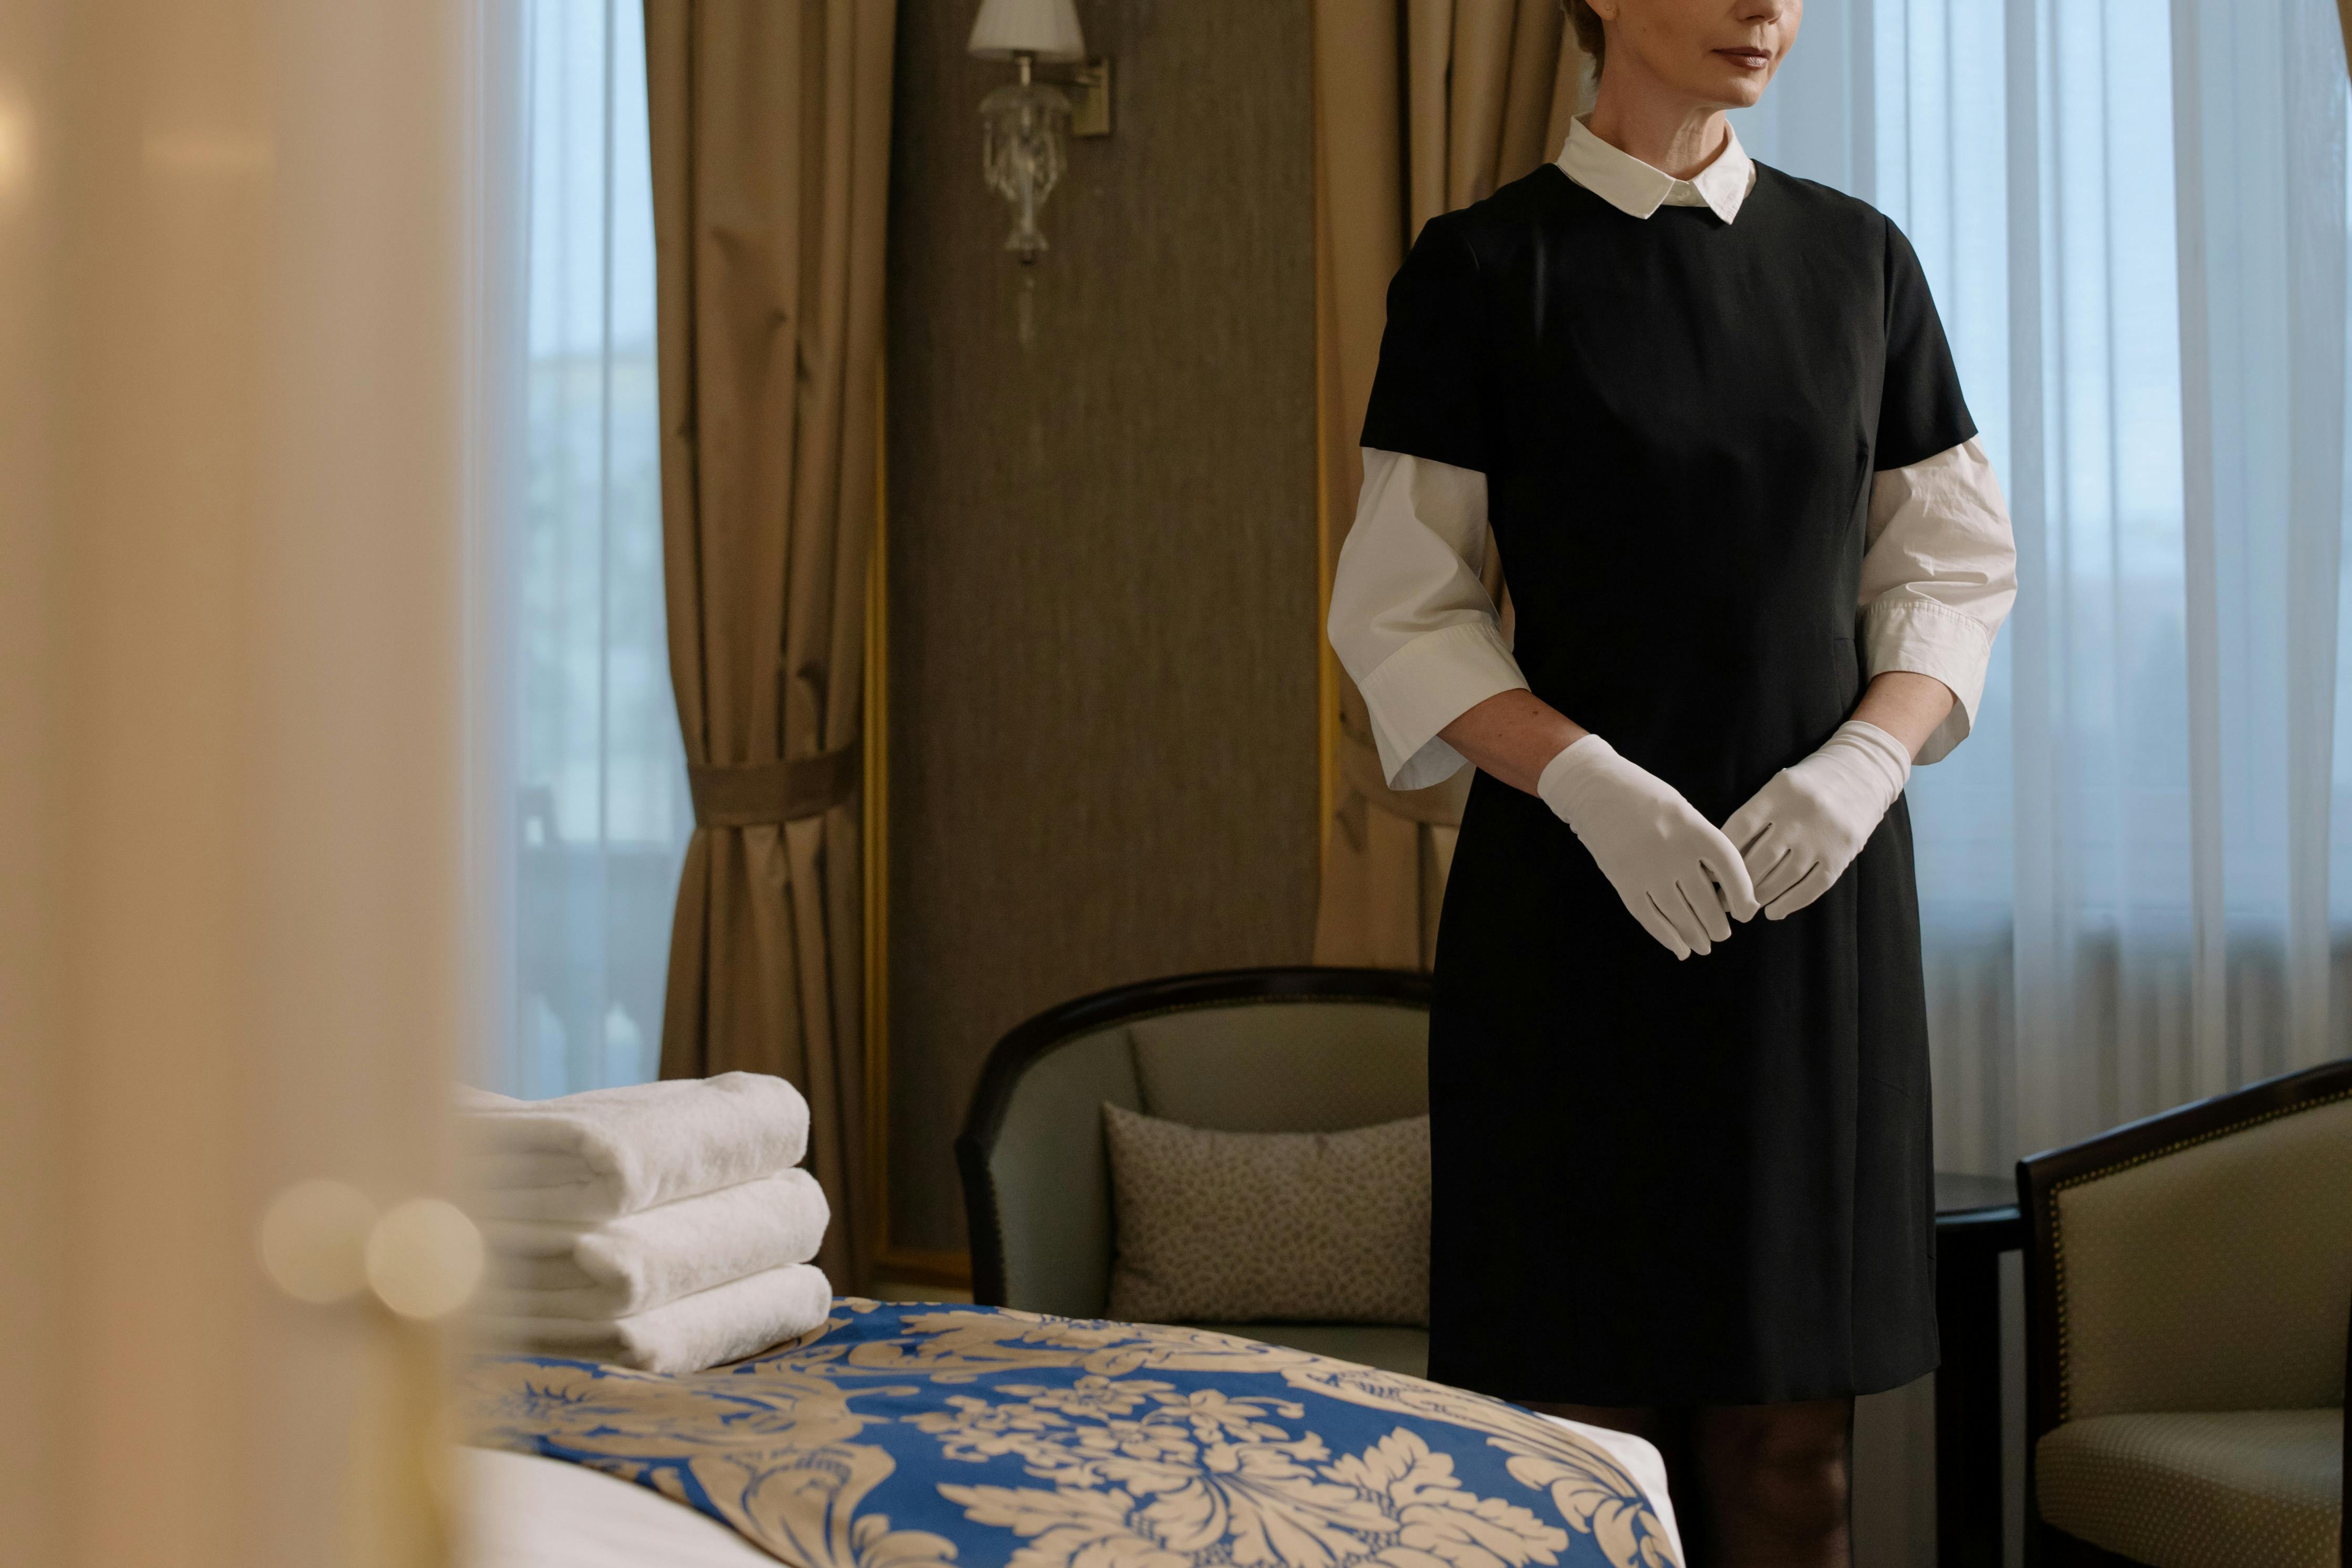 Woman in uniform beside hotel room bed | Source: Pexels